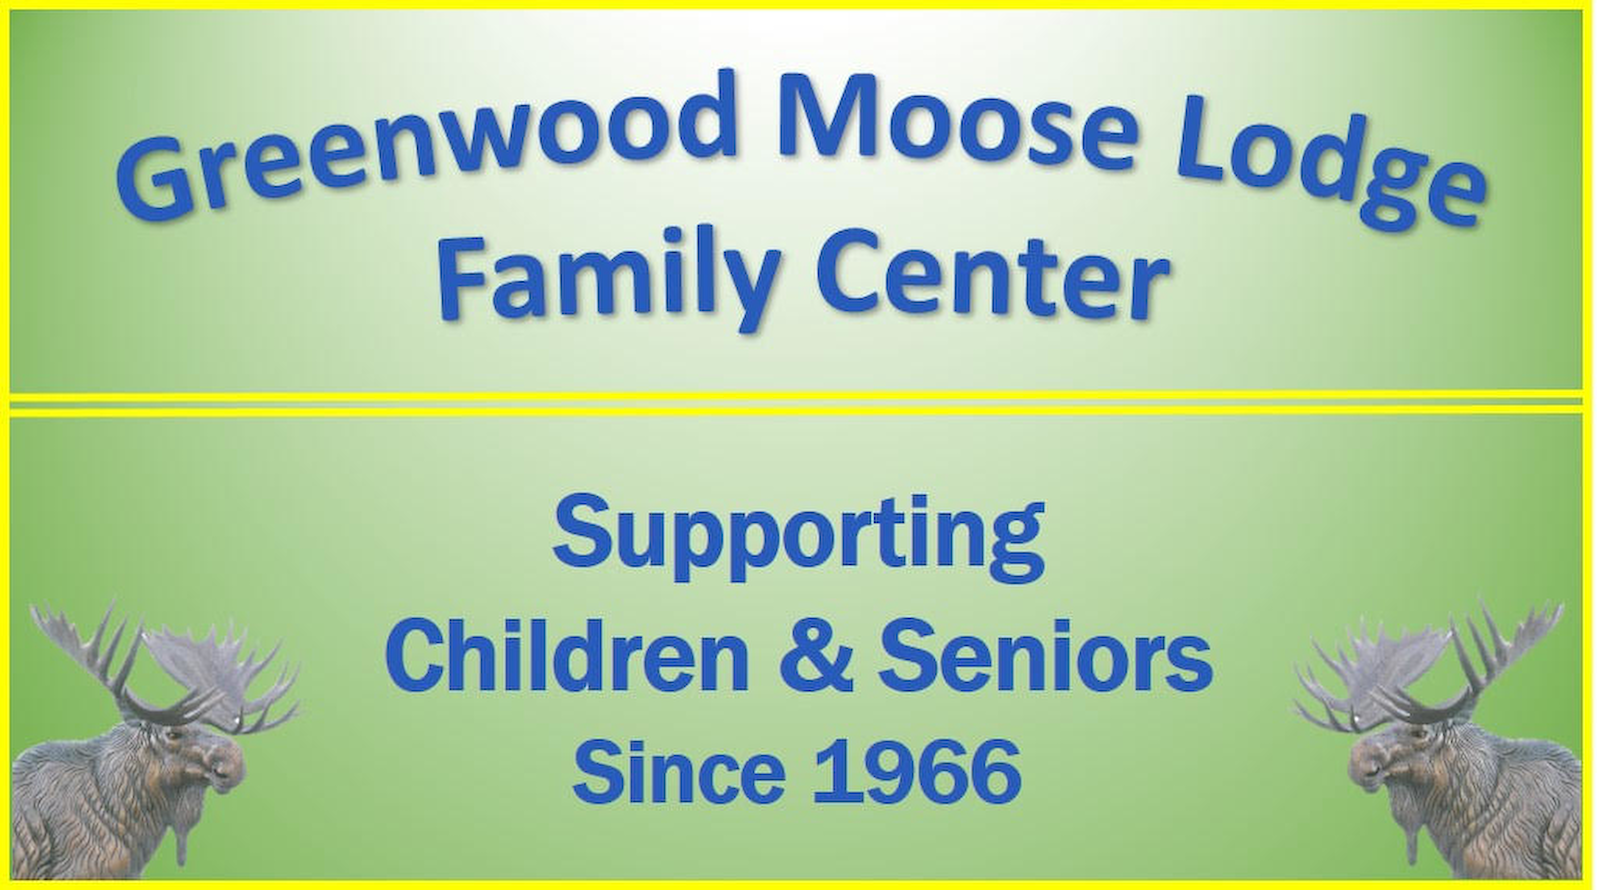 Greenwood Moose Lodge